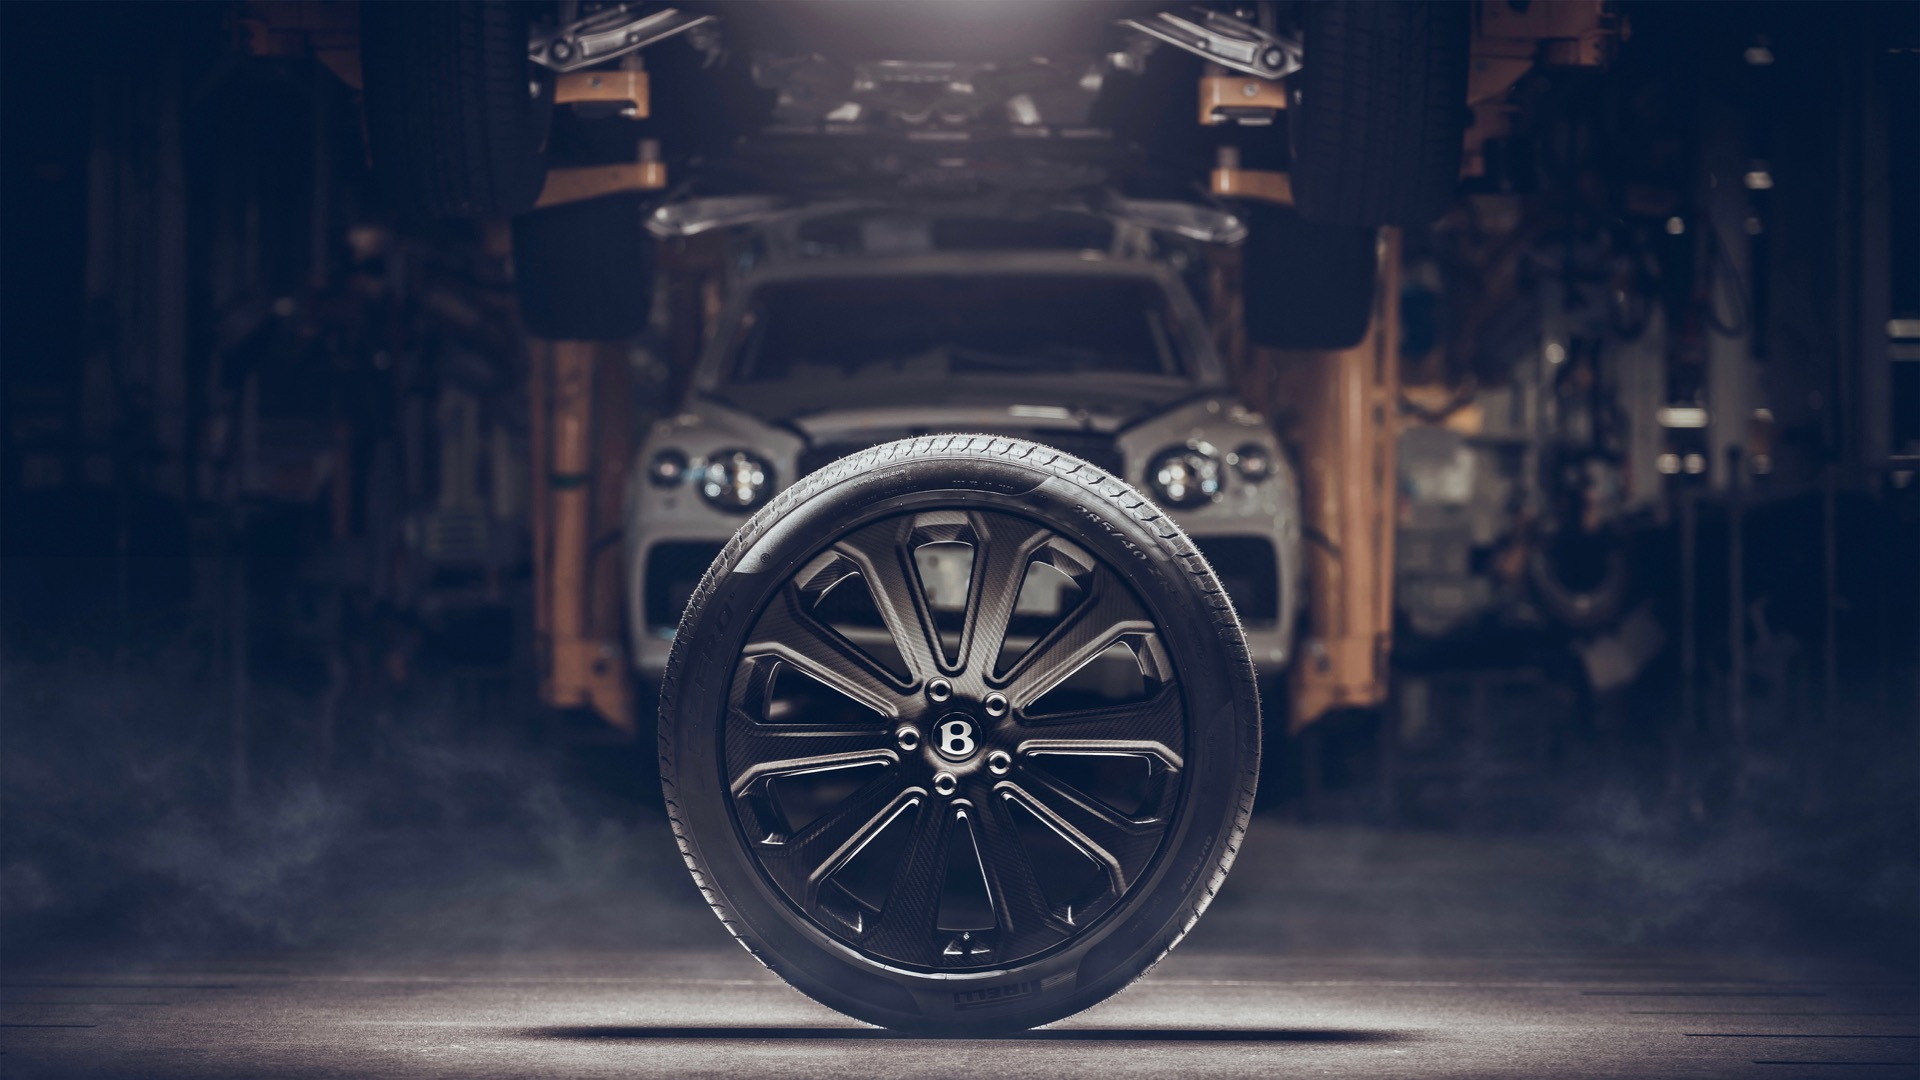 Bentley Bentayga carbon-fiber wheels